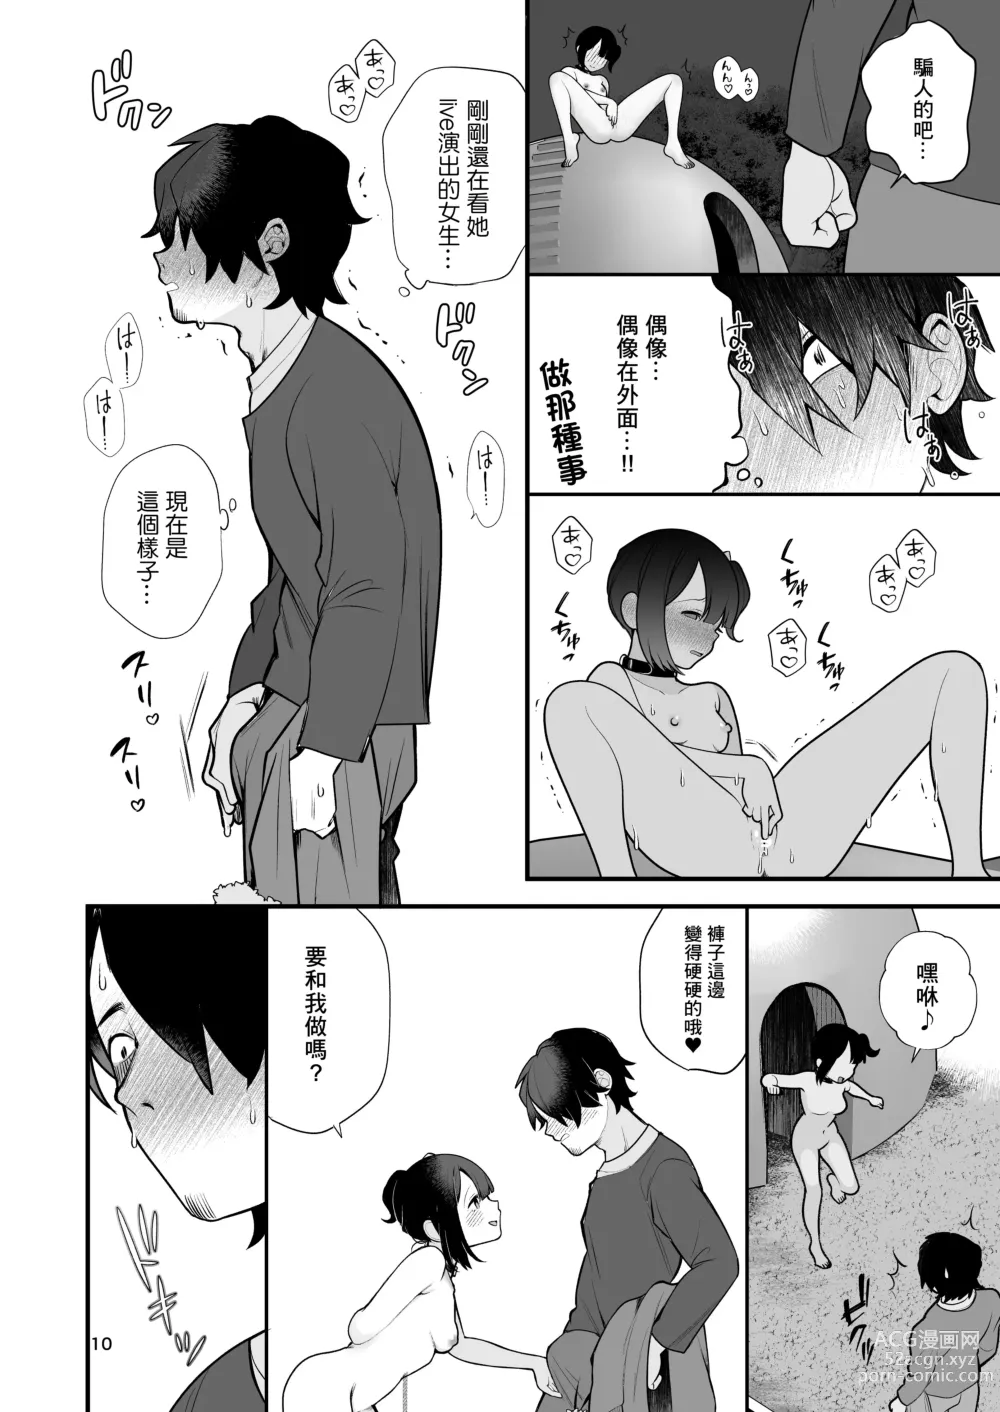 Page 13 of doujinshi 關於我推的偶像是暴露狂這件事